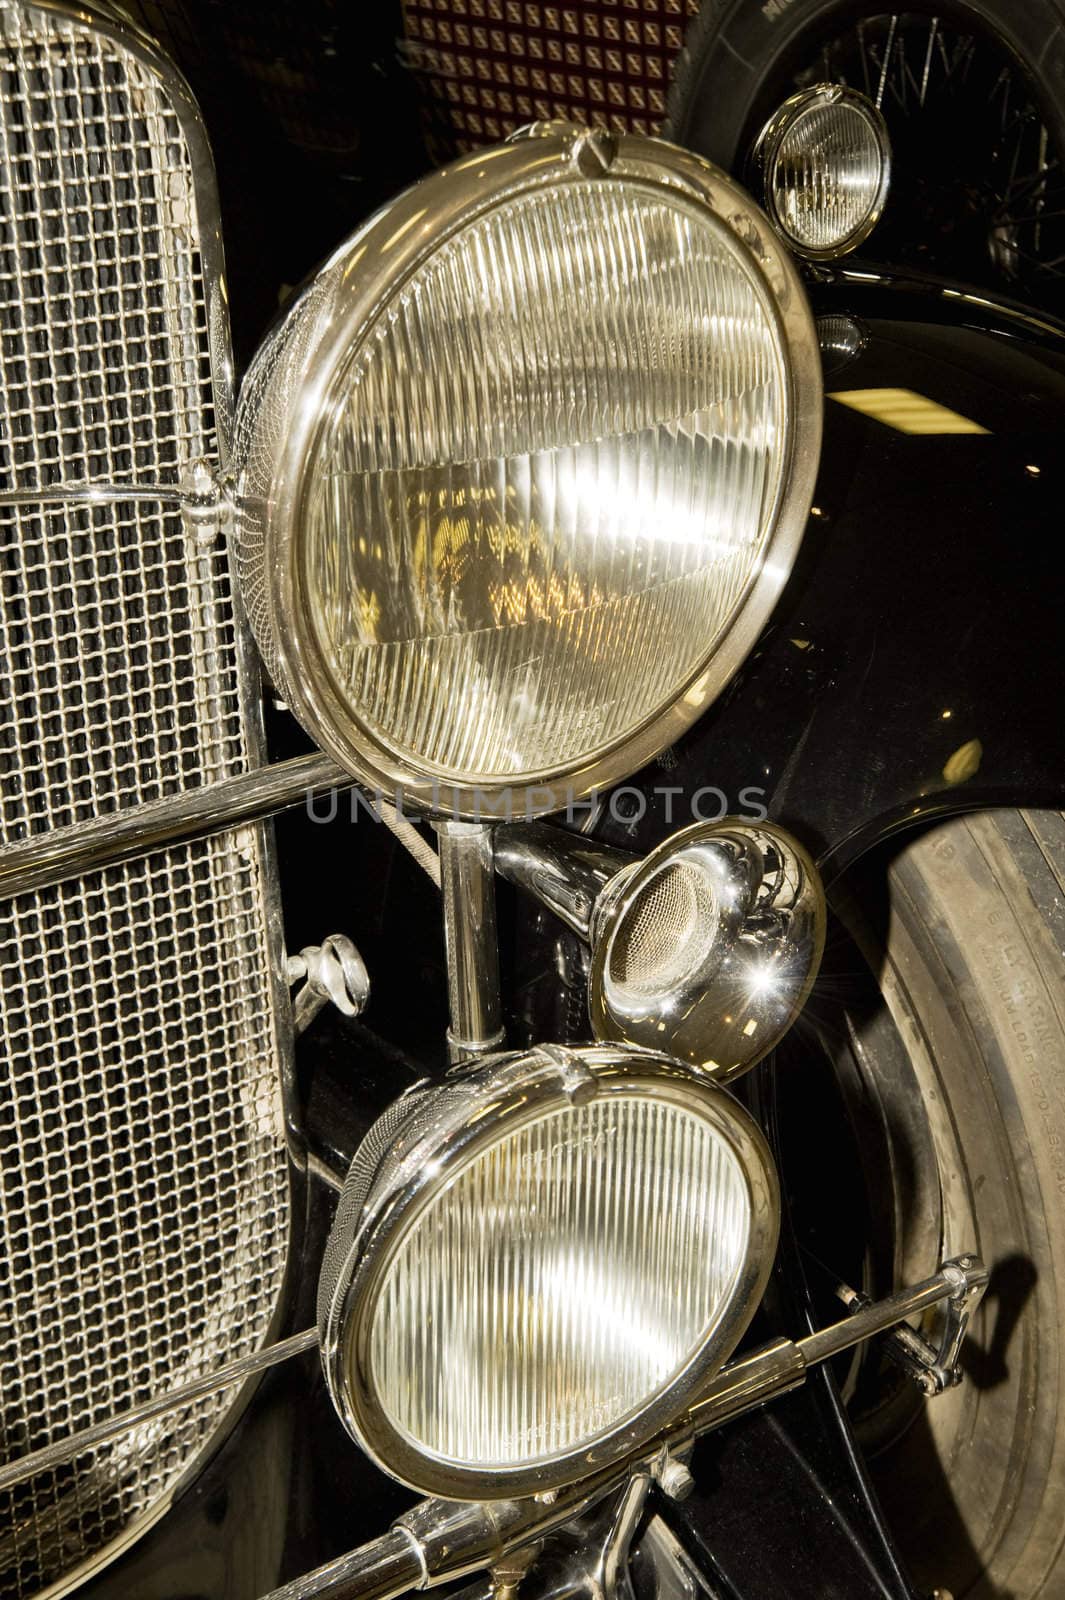 Automobile headlight by Alenmax